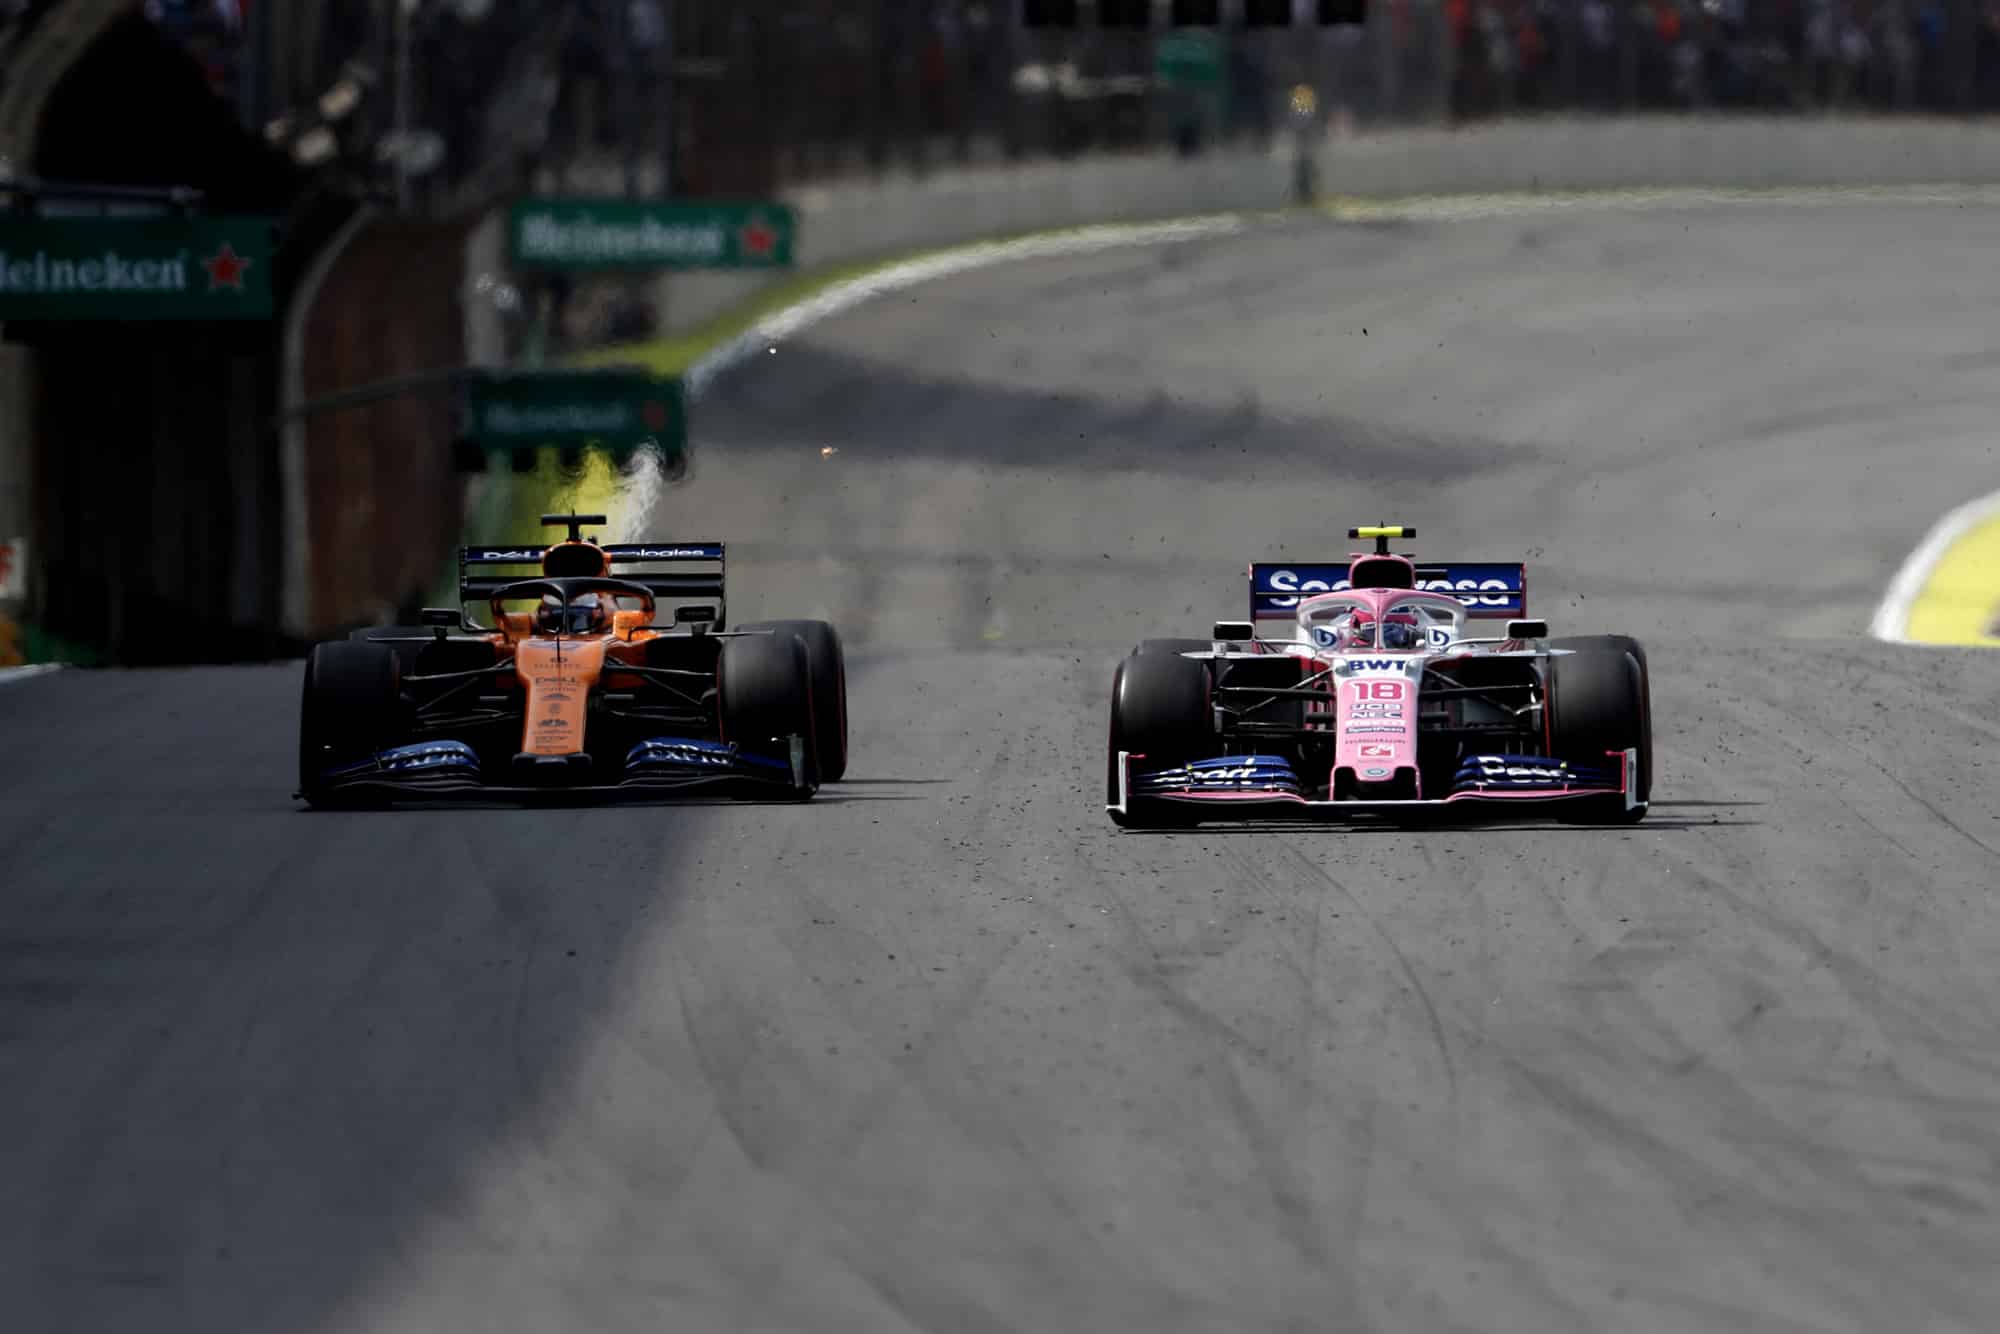 Carlos Sainz passes Lance Stroll at the 2019 F1 Brazilian Grand Prix